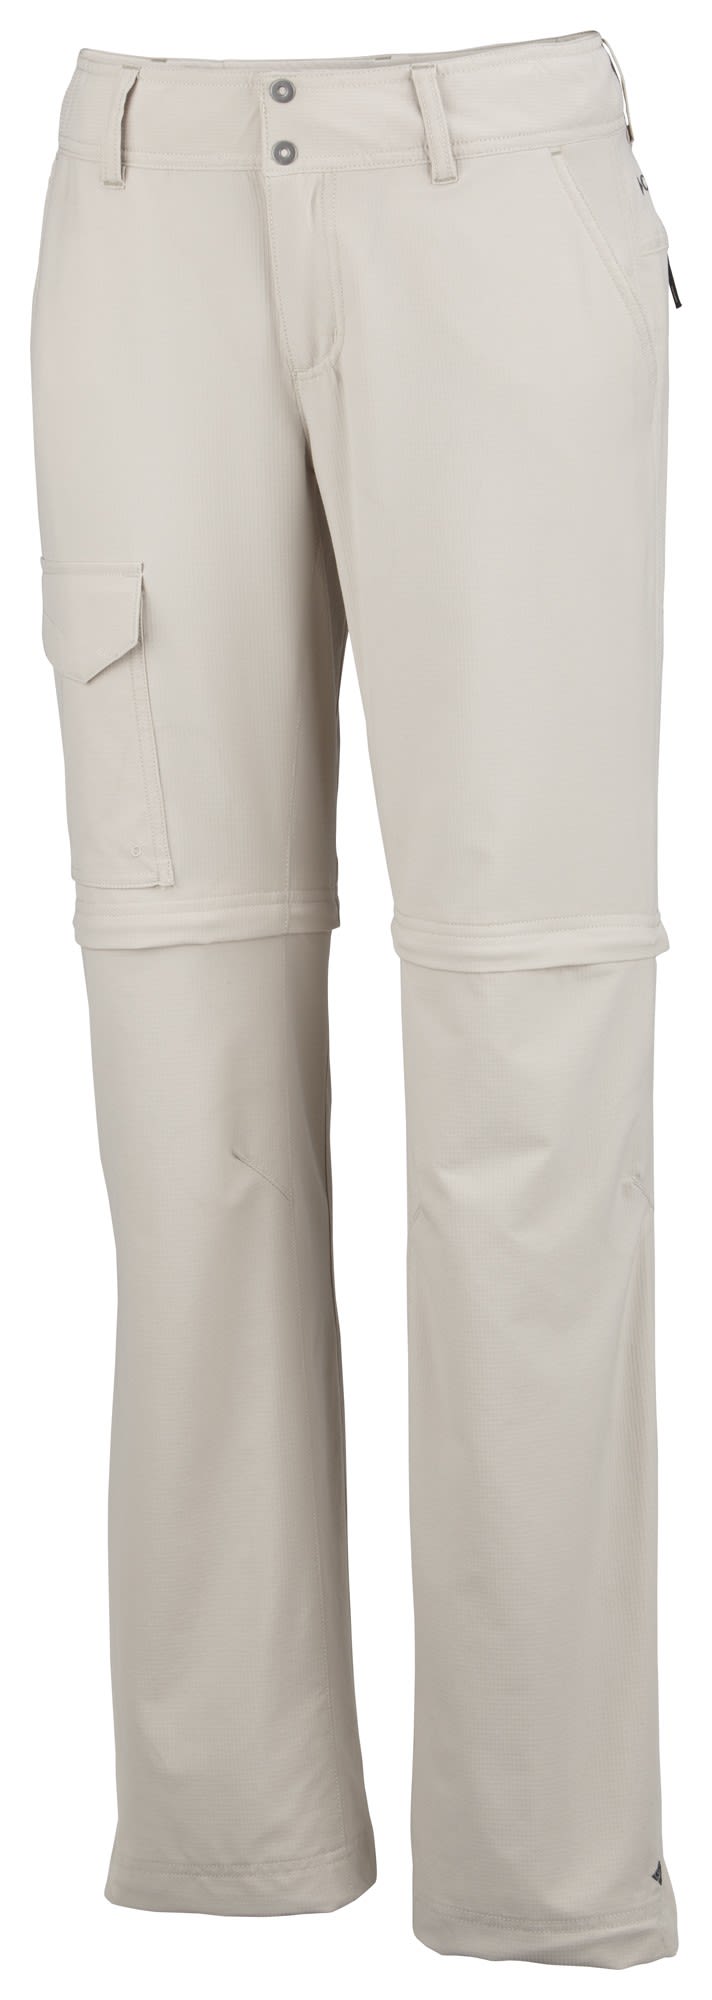 Columbia Silver Ridge Convertible Pant Beige- Female Softshellhosen- Grsse 14 - Short - Farbe Fossil